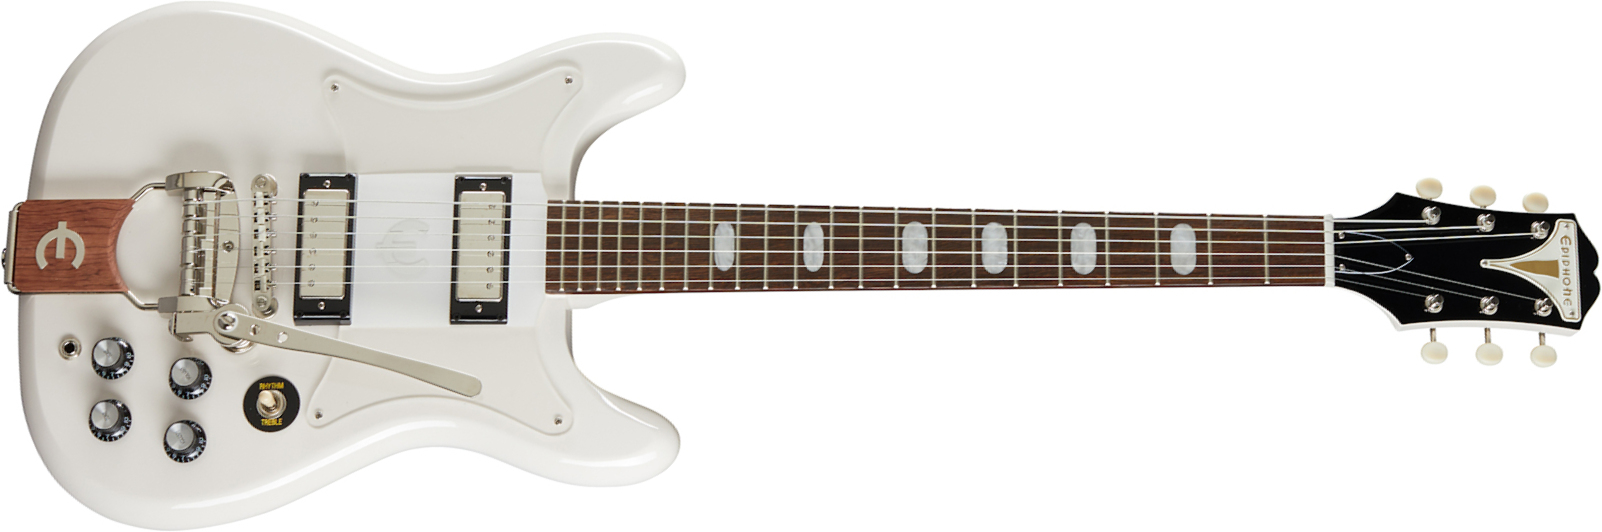 Epiphone Crestwood Custom 2mh Trem Lau - Polaris White - Retro-rock elektrische gitaar - Main picture